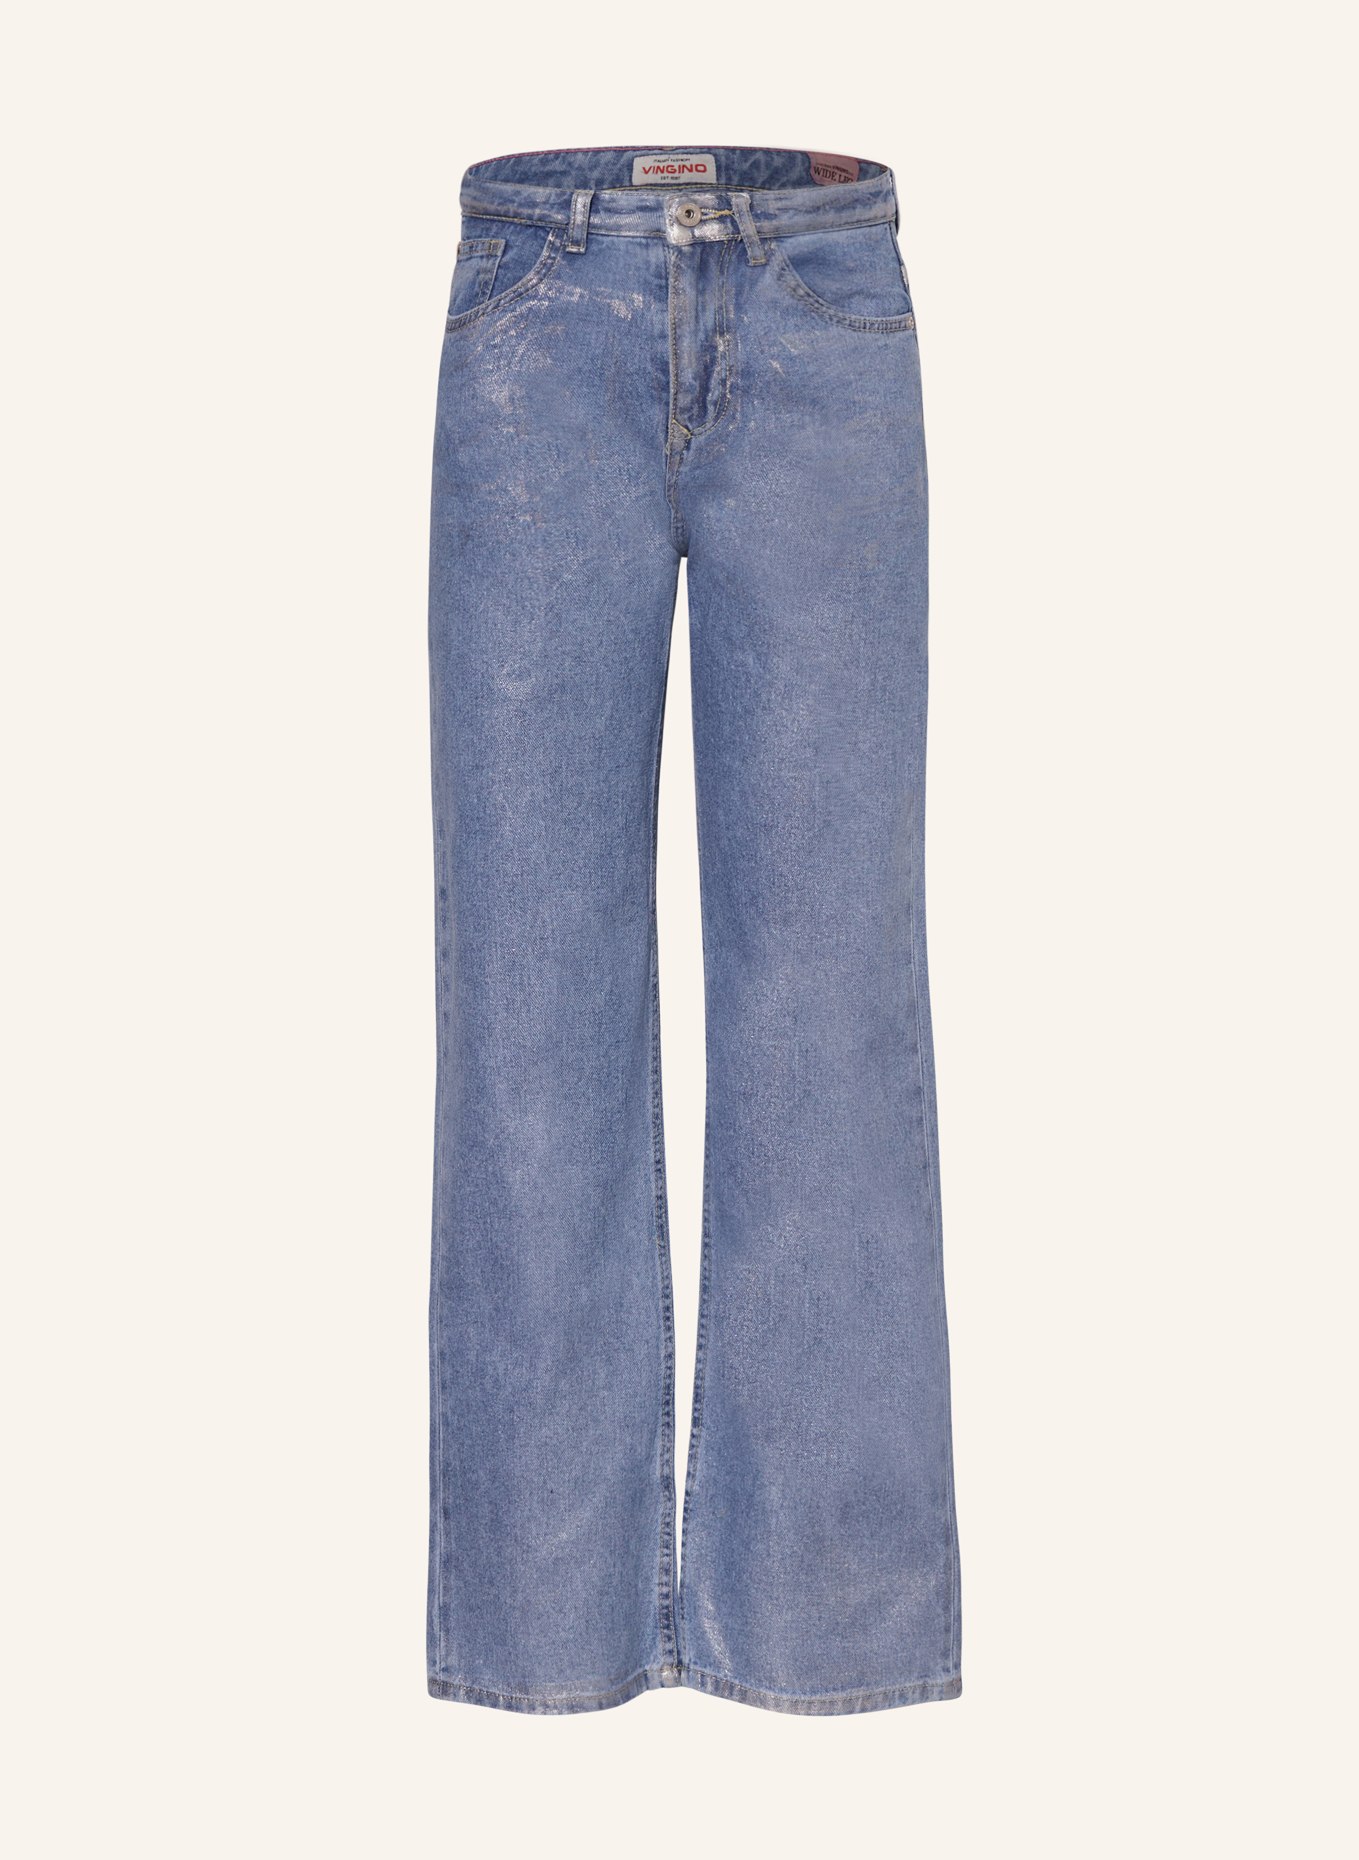 VINGINO Jeans CATO, Farbe: METALLIC DENIM (Bild 1)